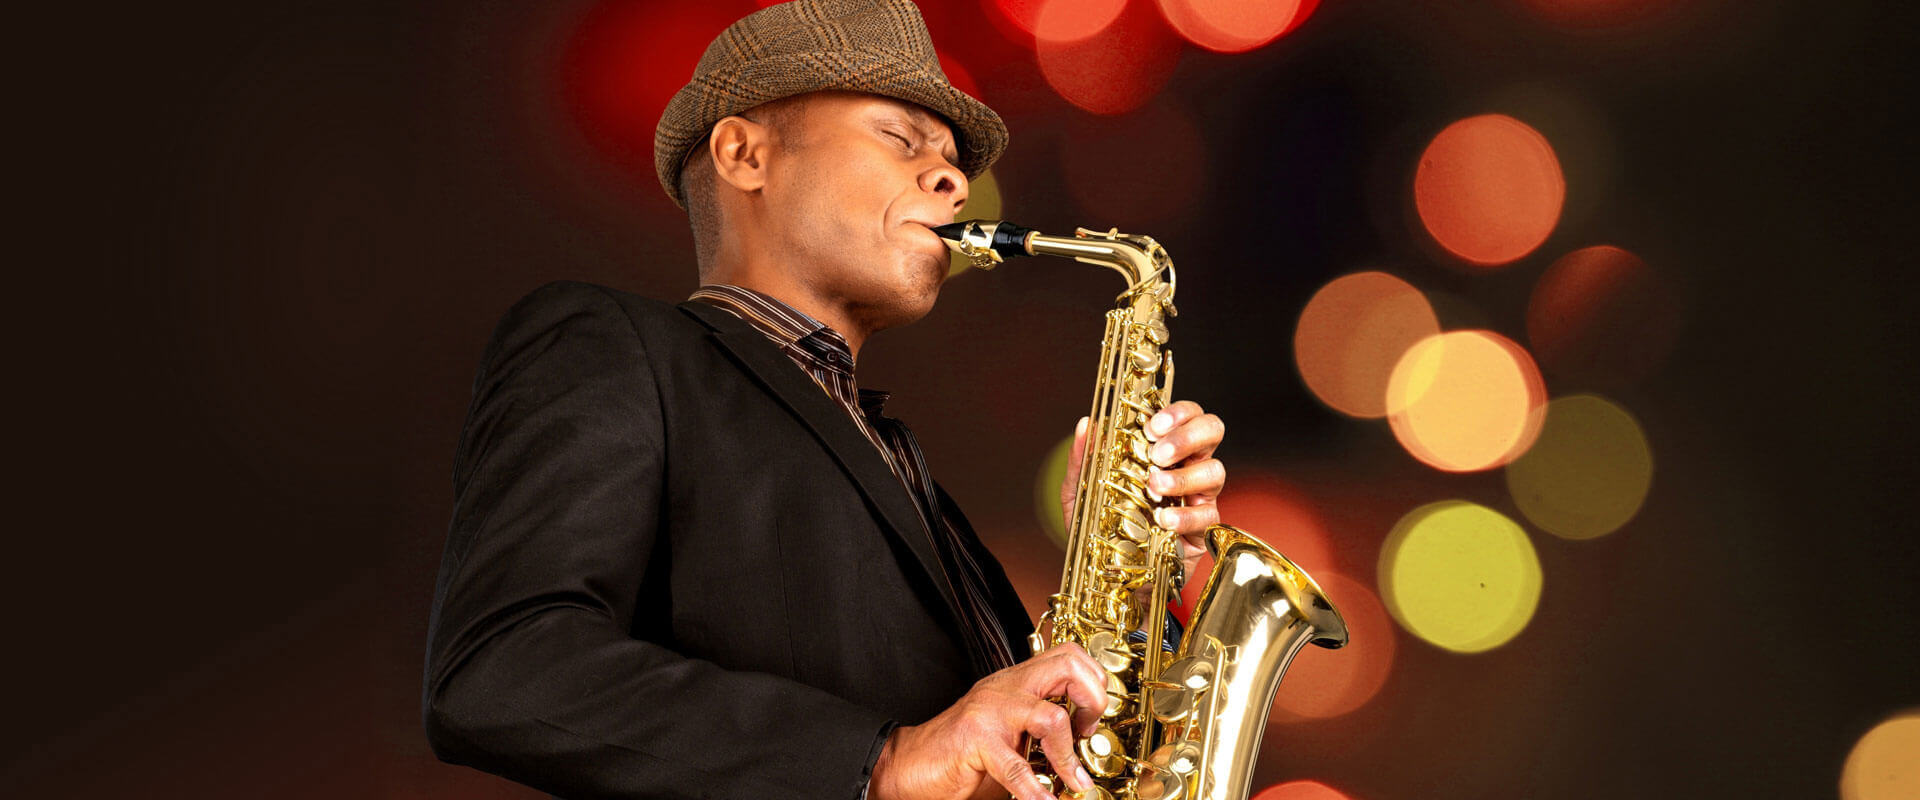 Saxophone Lessons Avon, OH